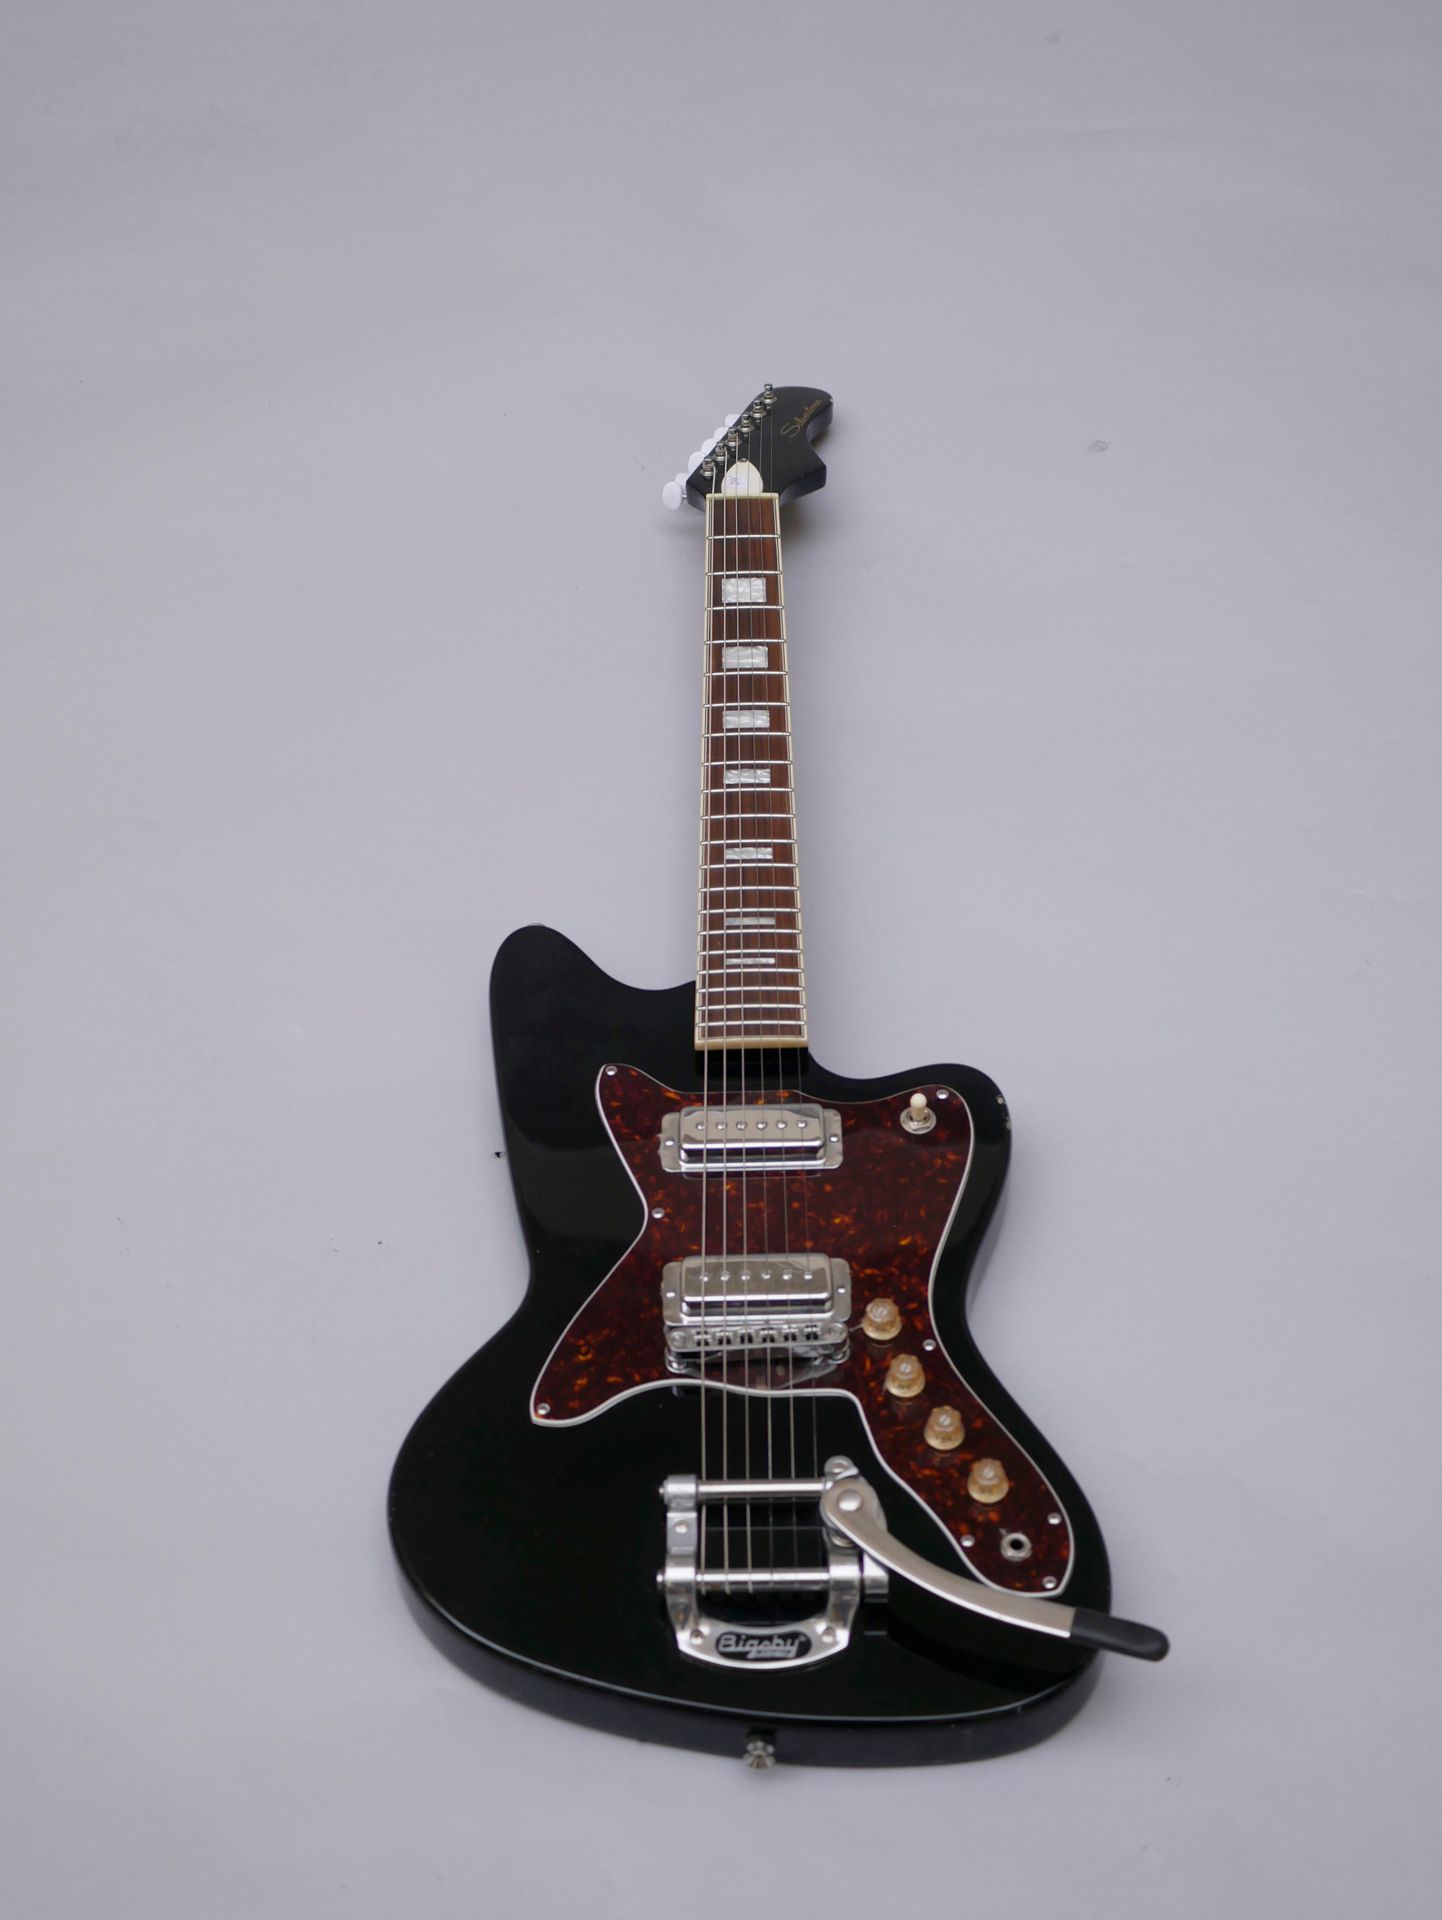 Null Guitare électrique Solidbody de marque Silvertone modèle 1478, made in Indo&hellip;